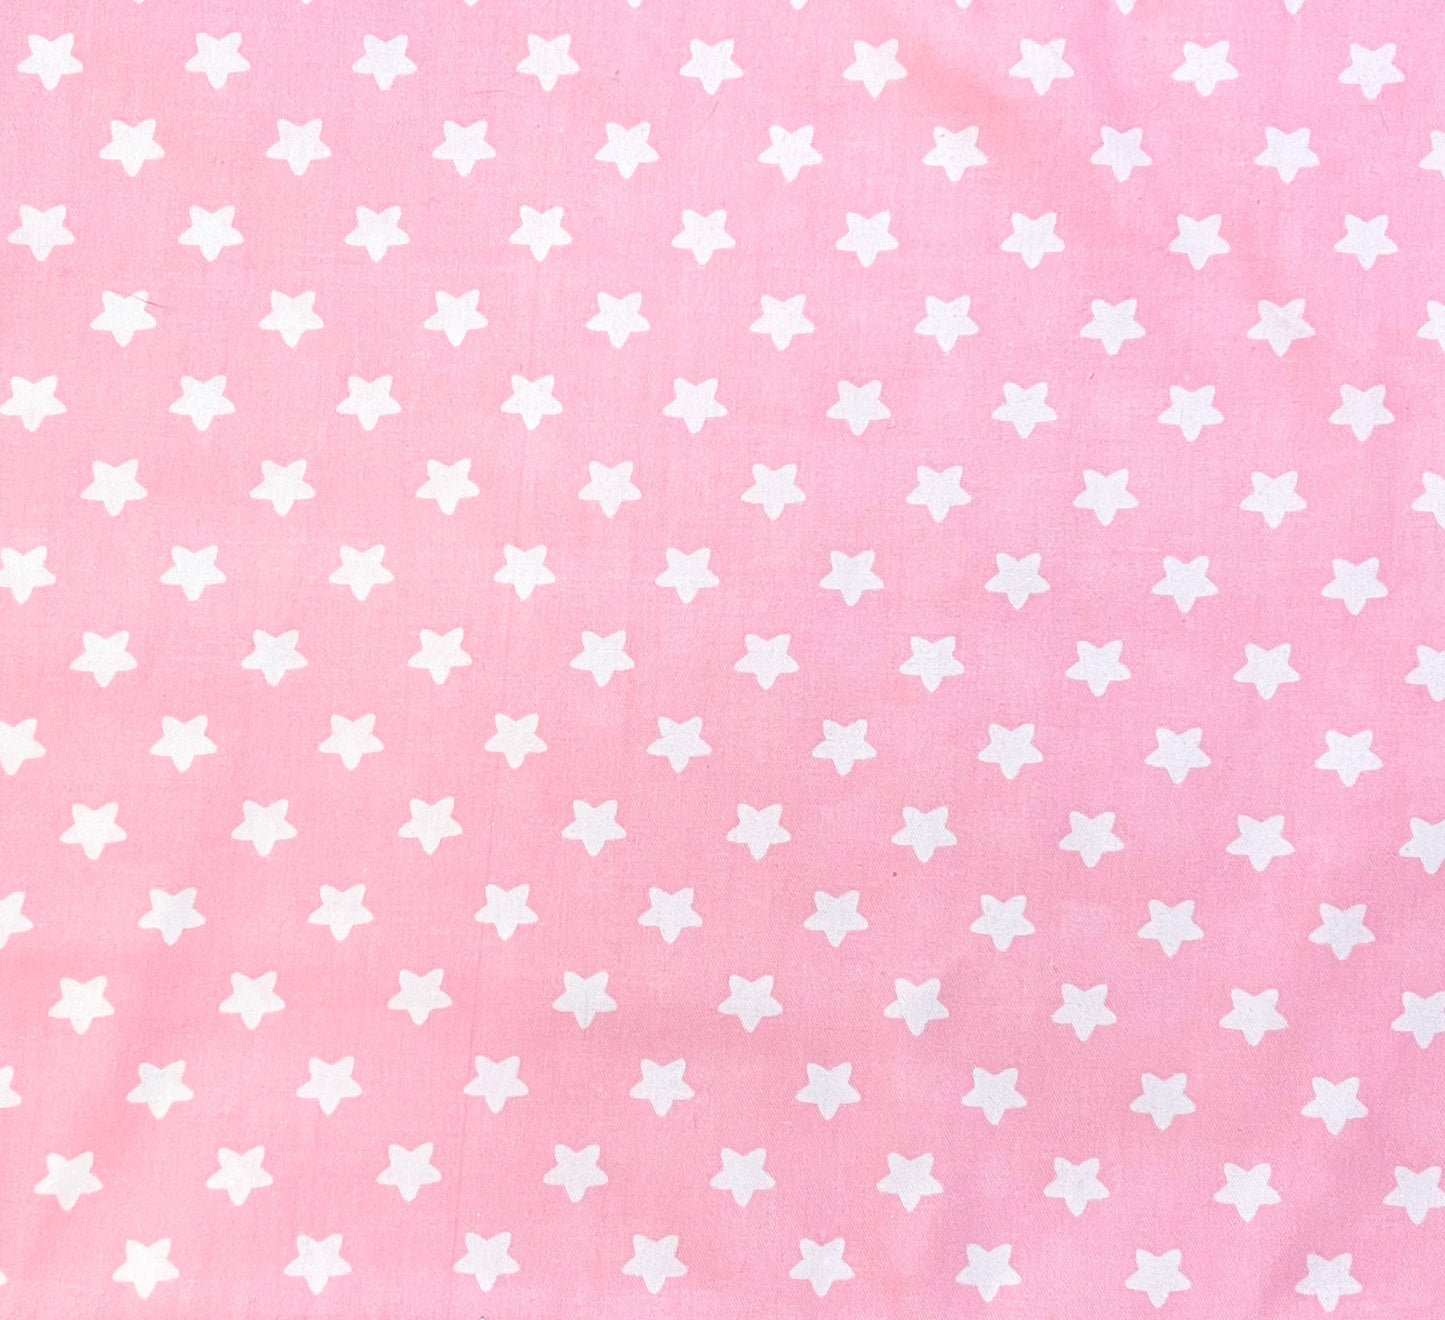 White stars on pink